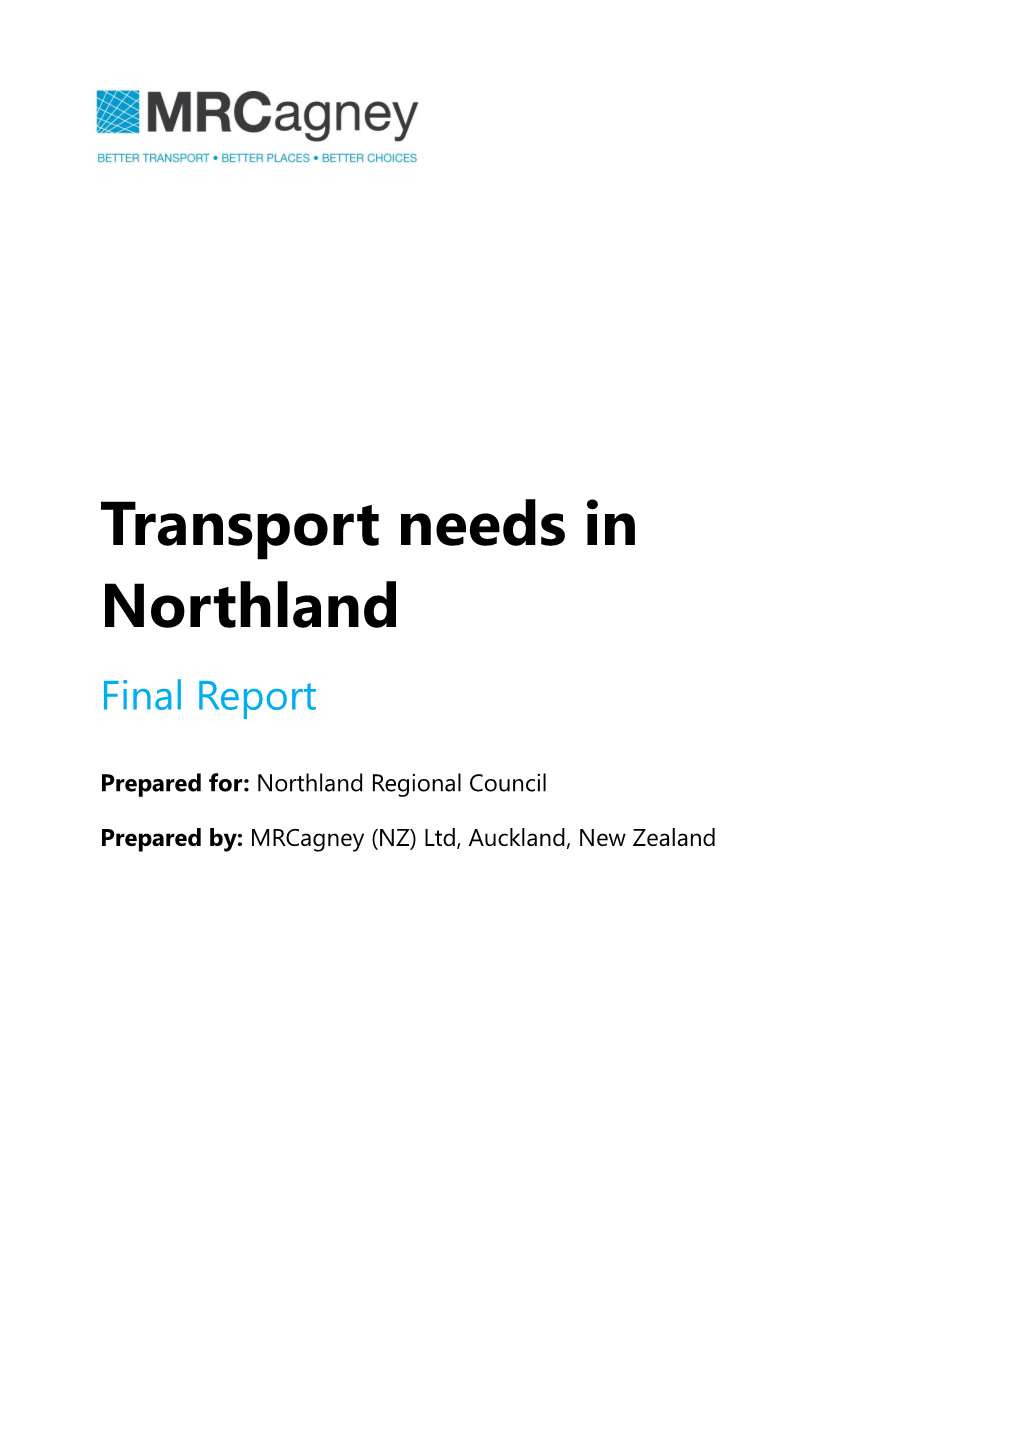 Northland Transport Needs Final Report